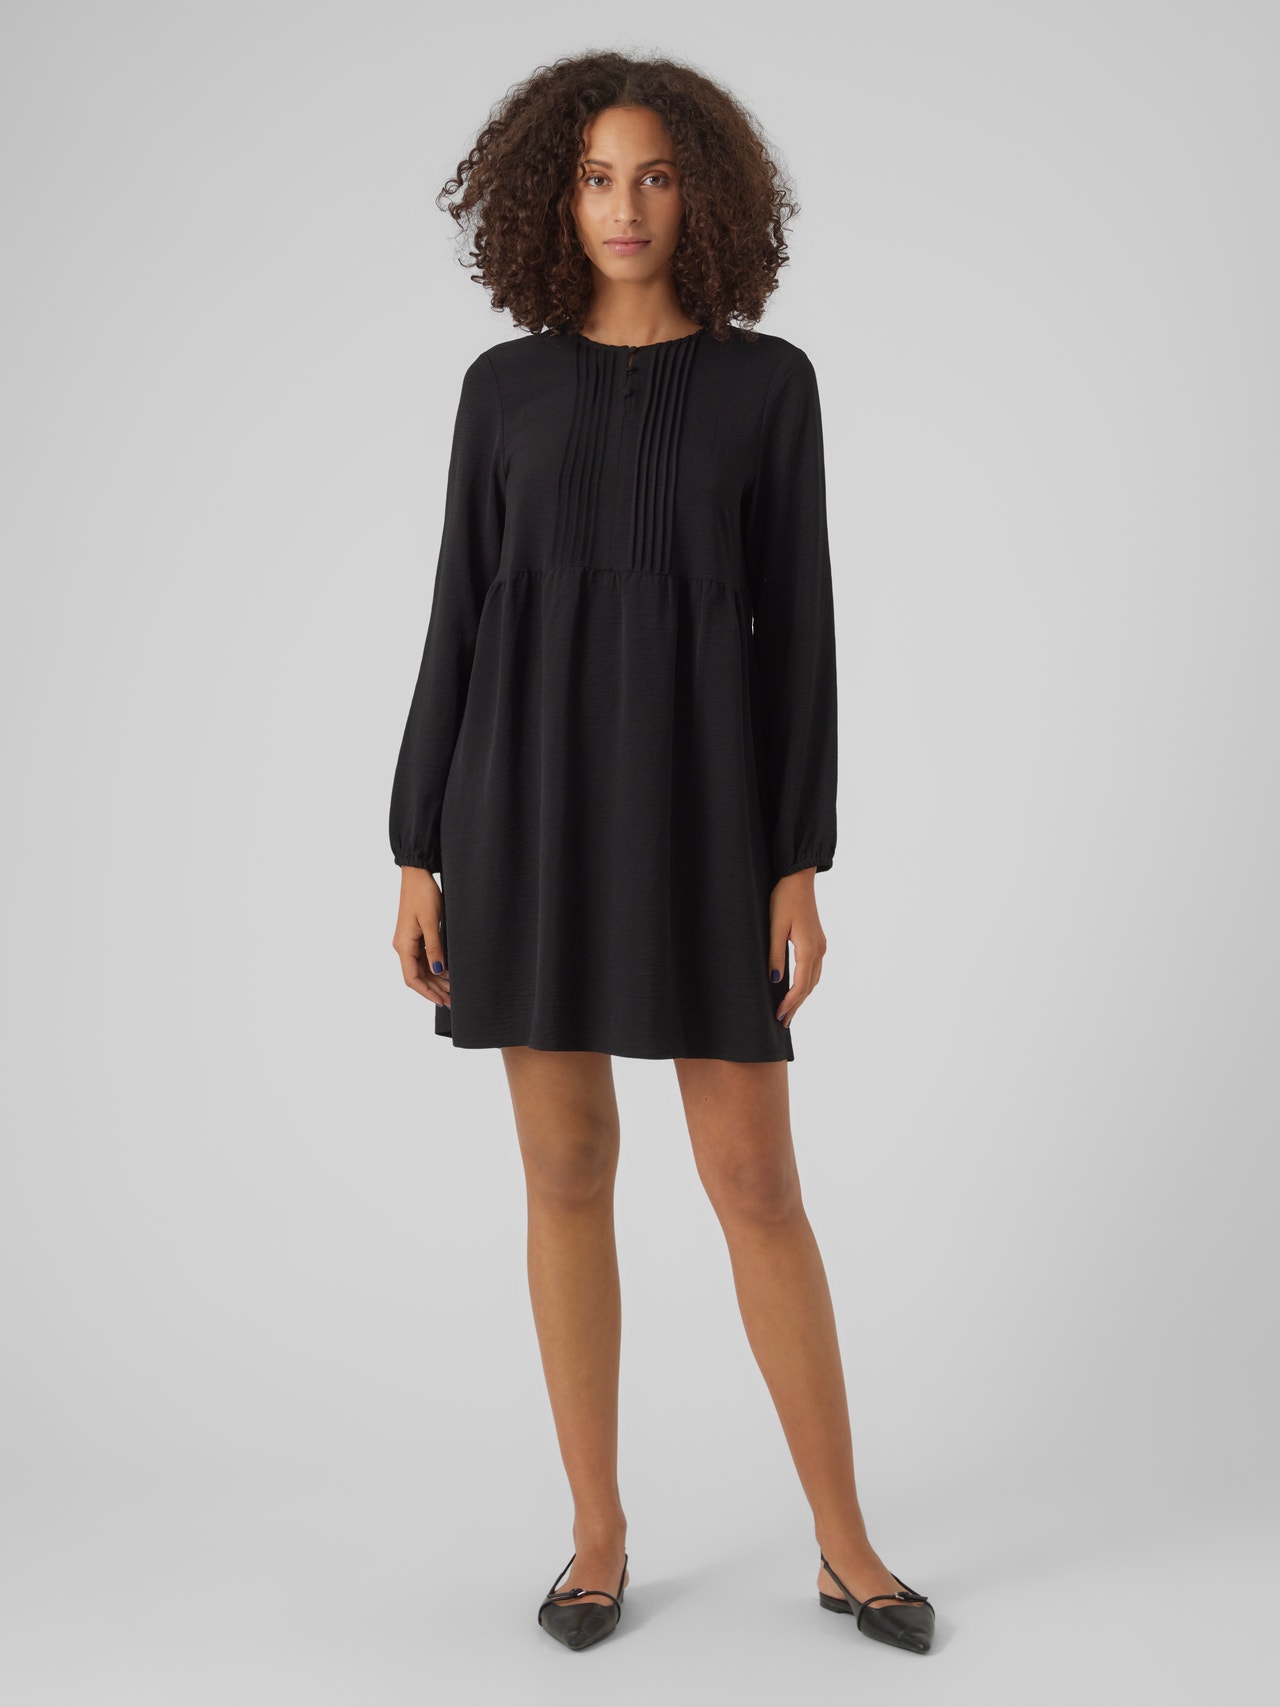 Vero Moda VMALVA Short dress -Black - 10301136